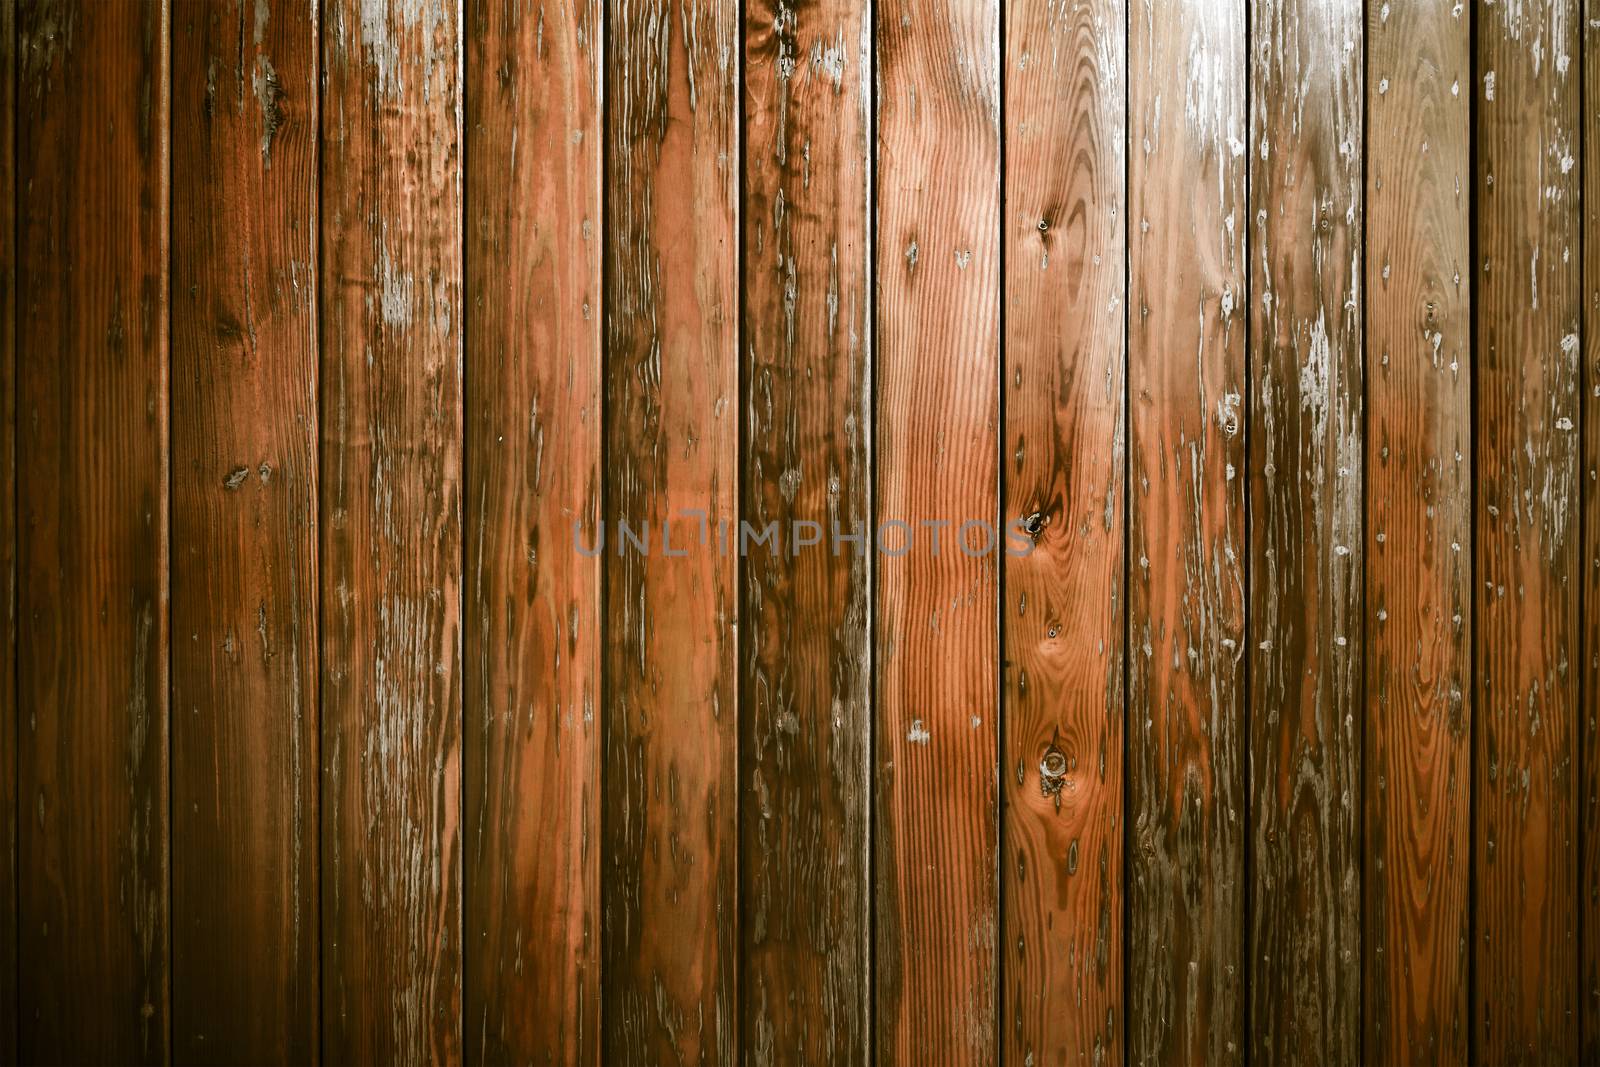 Grunge Wood plank brown texture background by FrameAngel